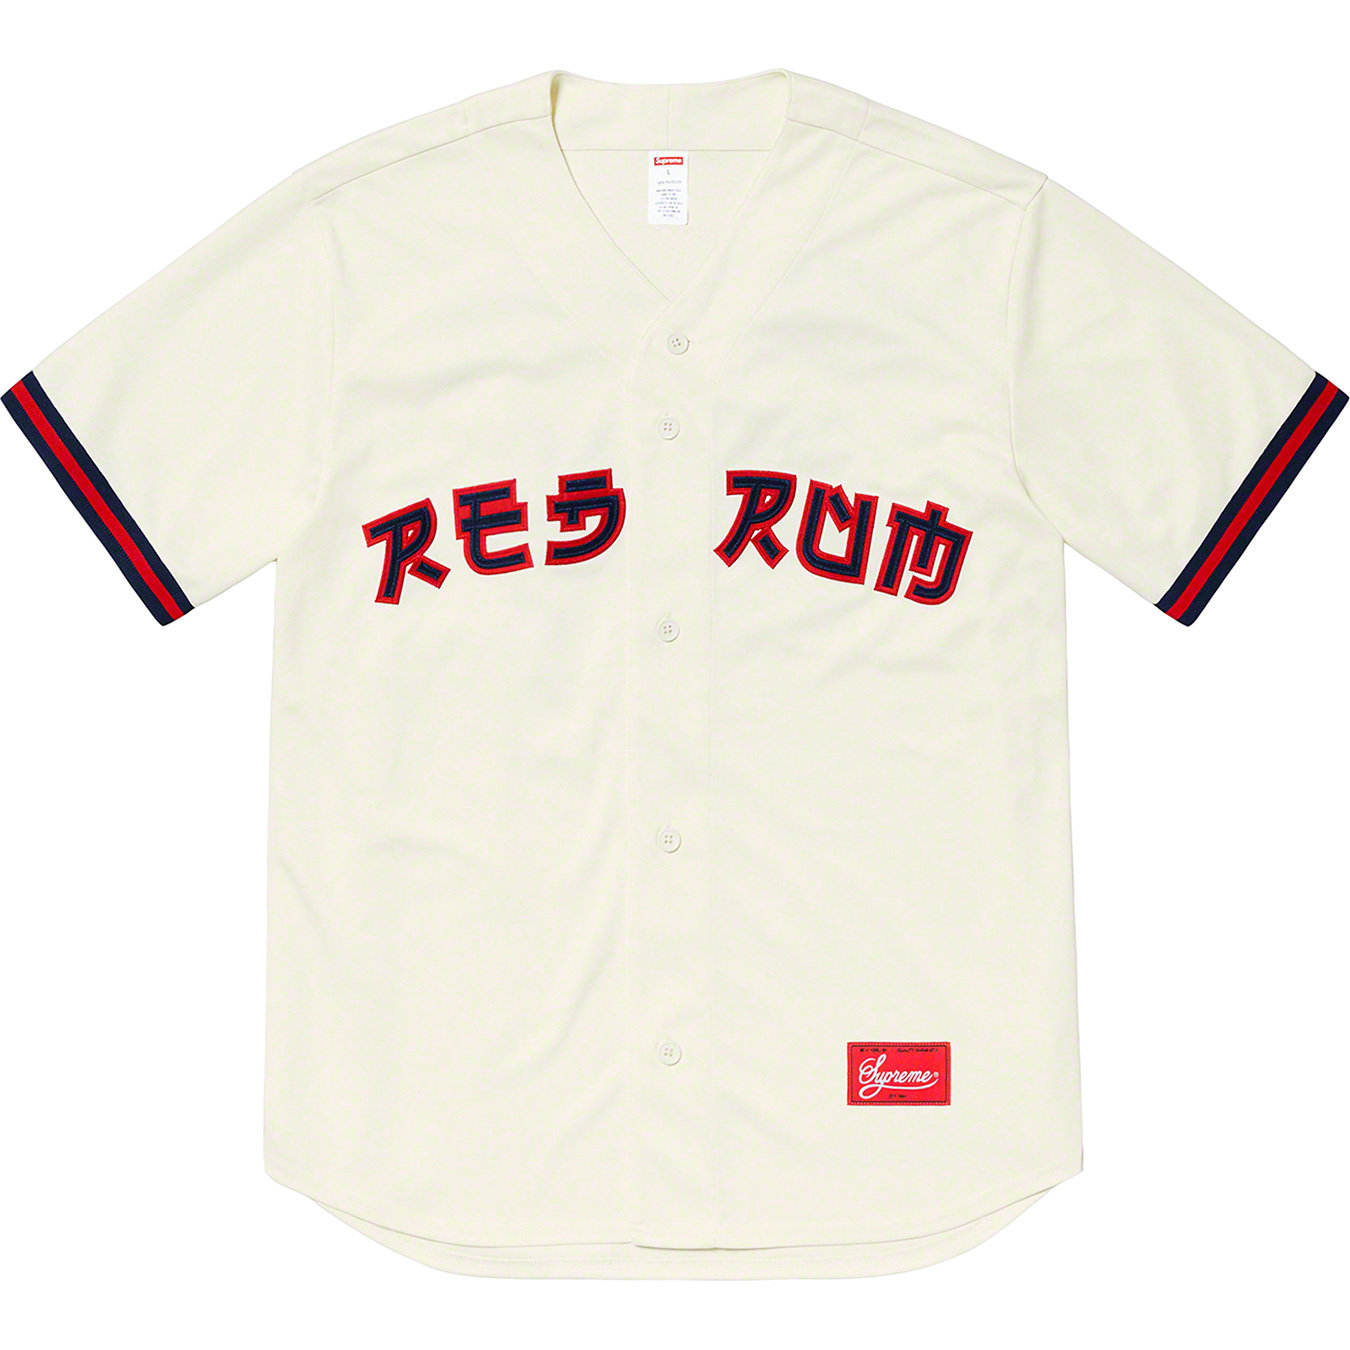 Red Rum Baseball Jersey - spring summer 2019 - Supreme